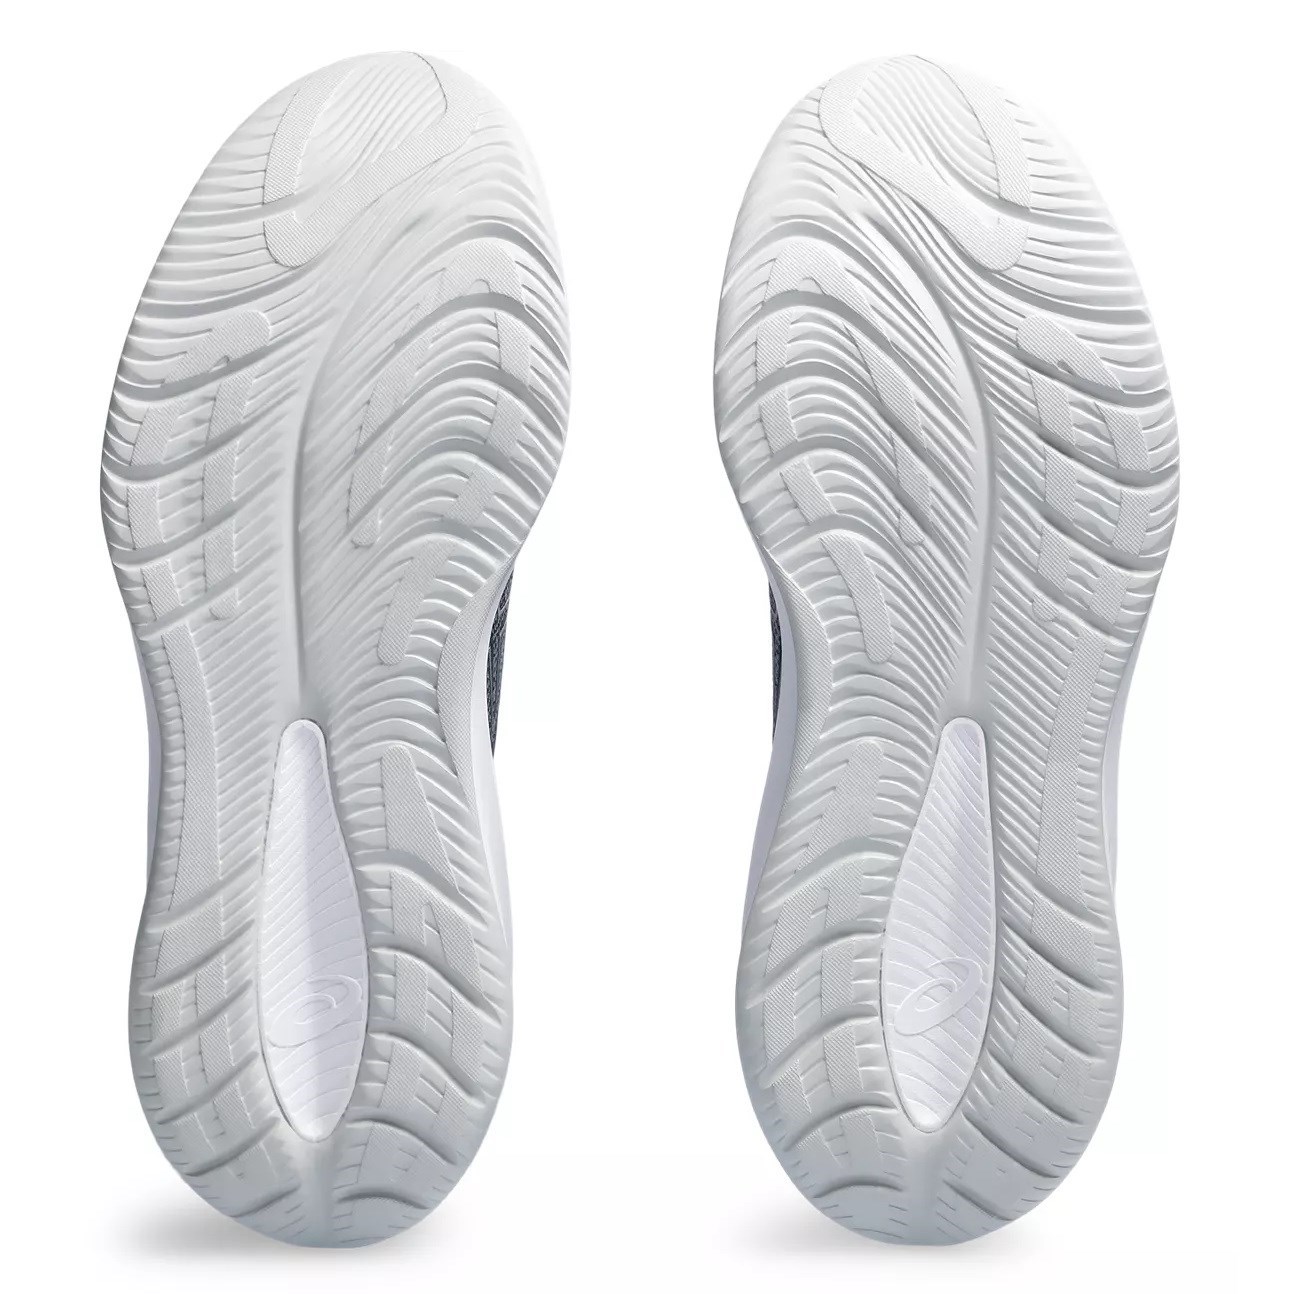 Asics Gel Cumulus 26 - Mens Running Shoes - Sheet Rock/Concrete ...